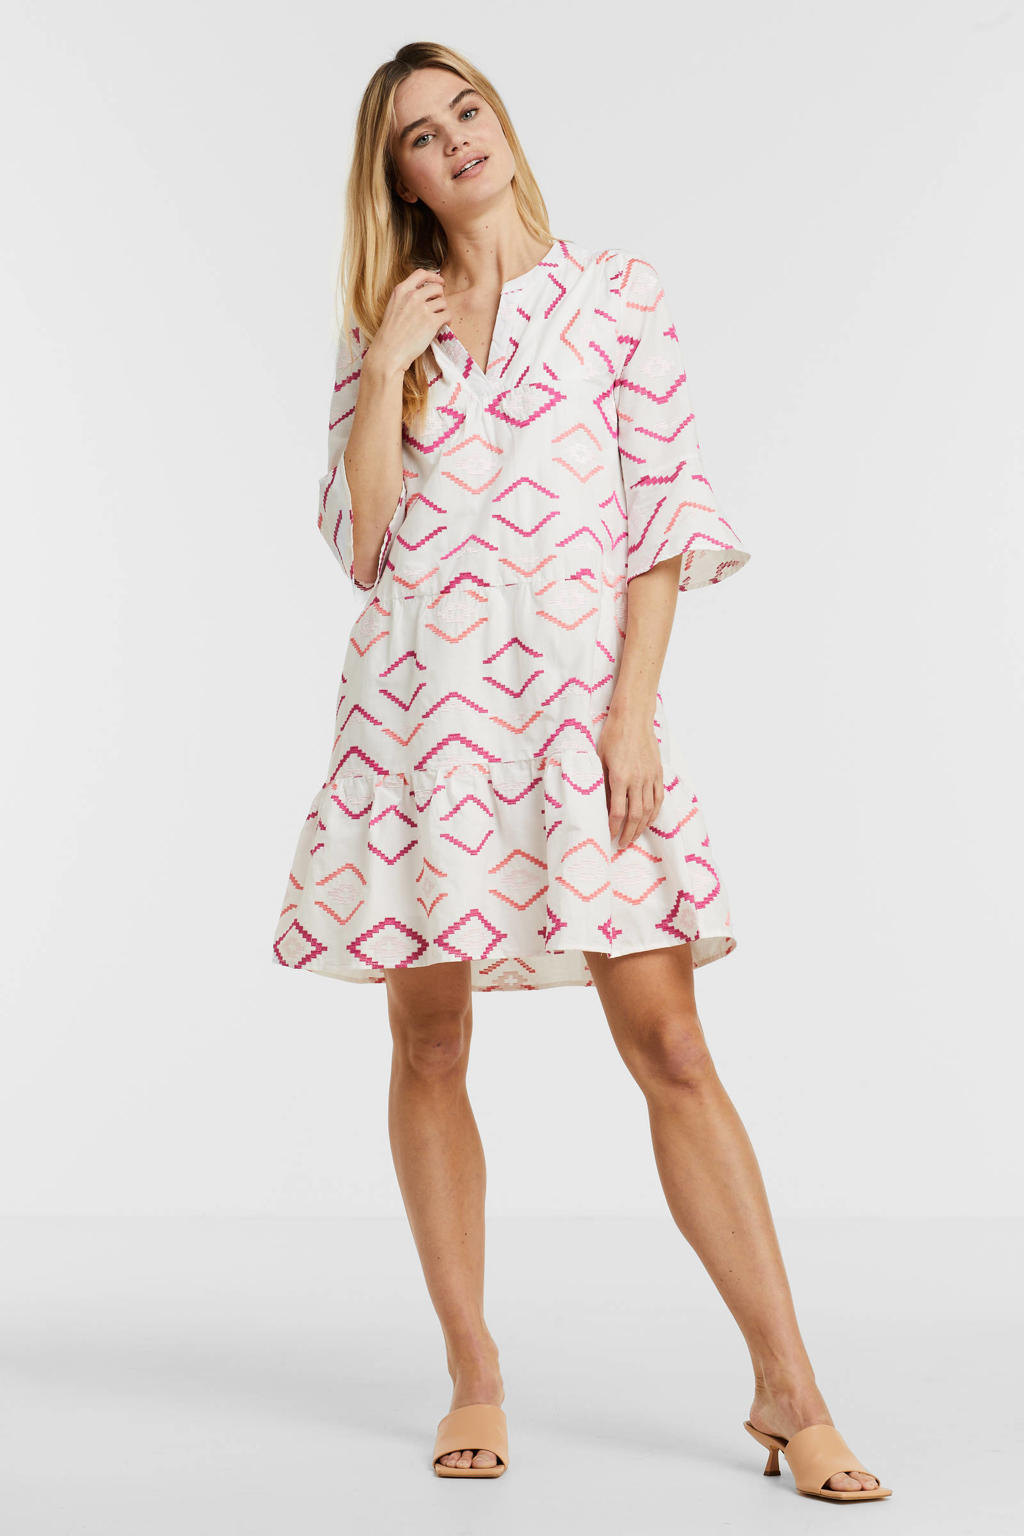 Smashed Lemon A-lijn jurk Jordan met grafische print en borduursels wit/roze